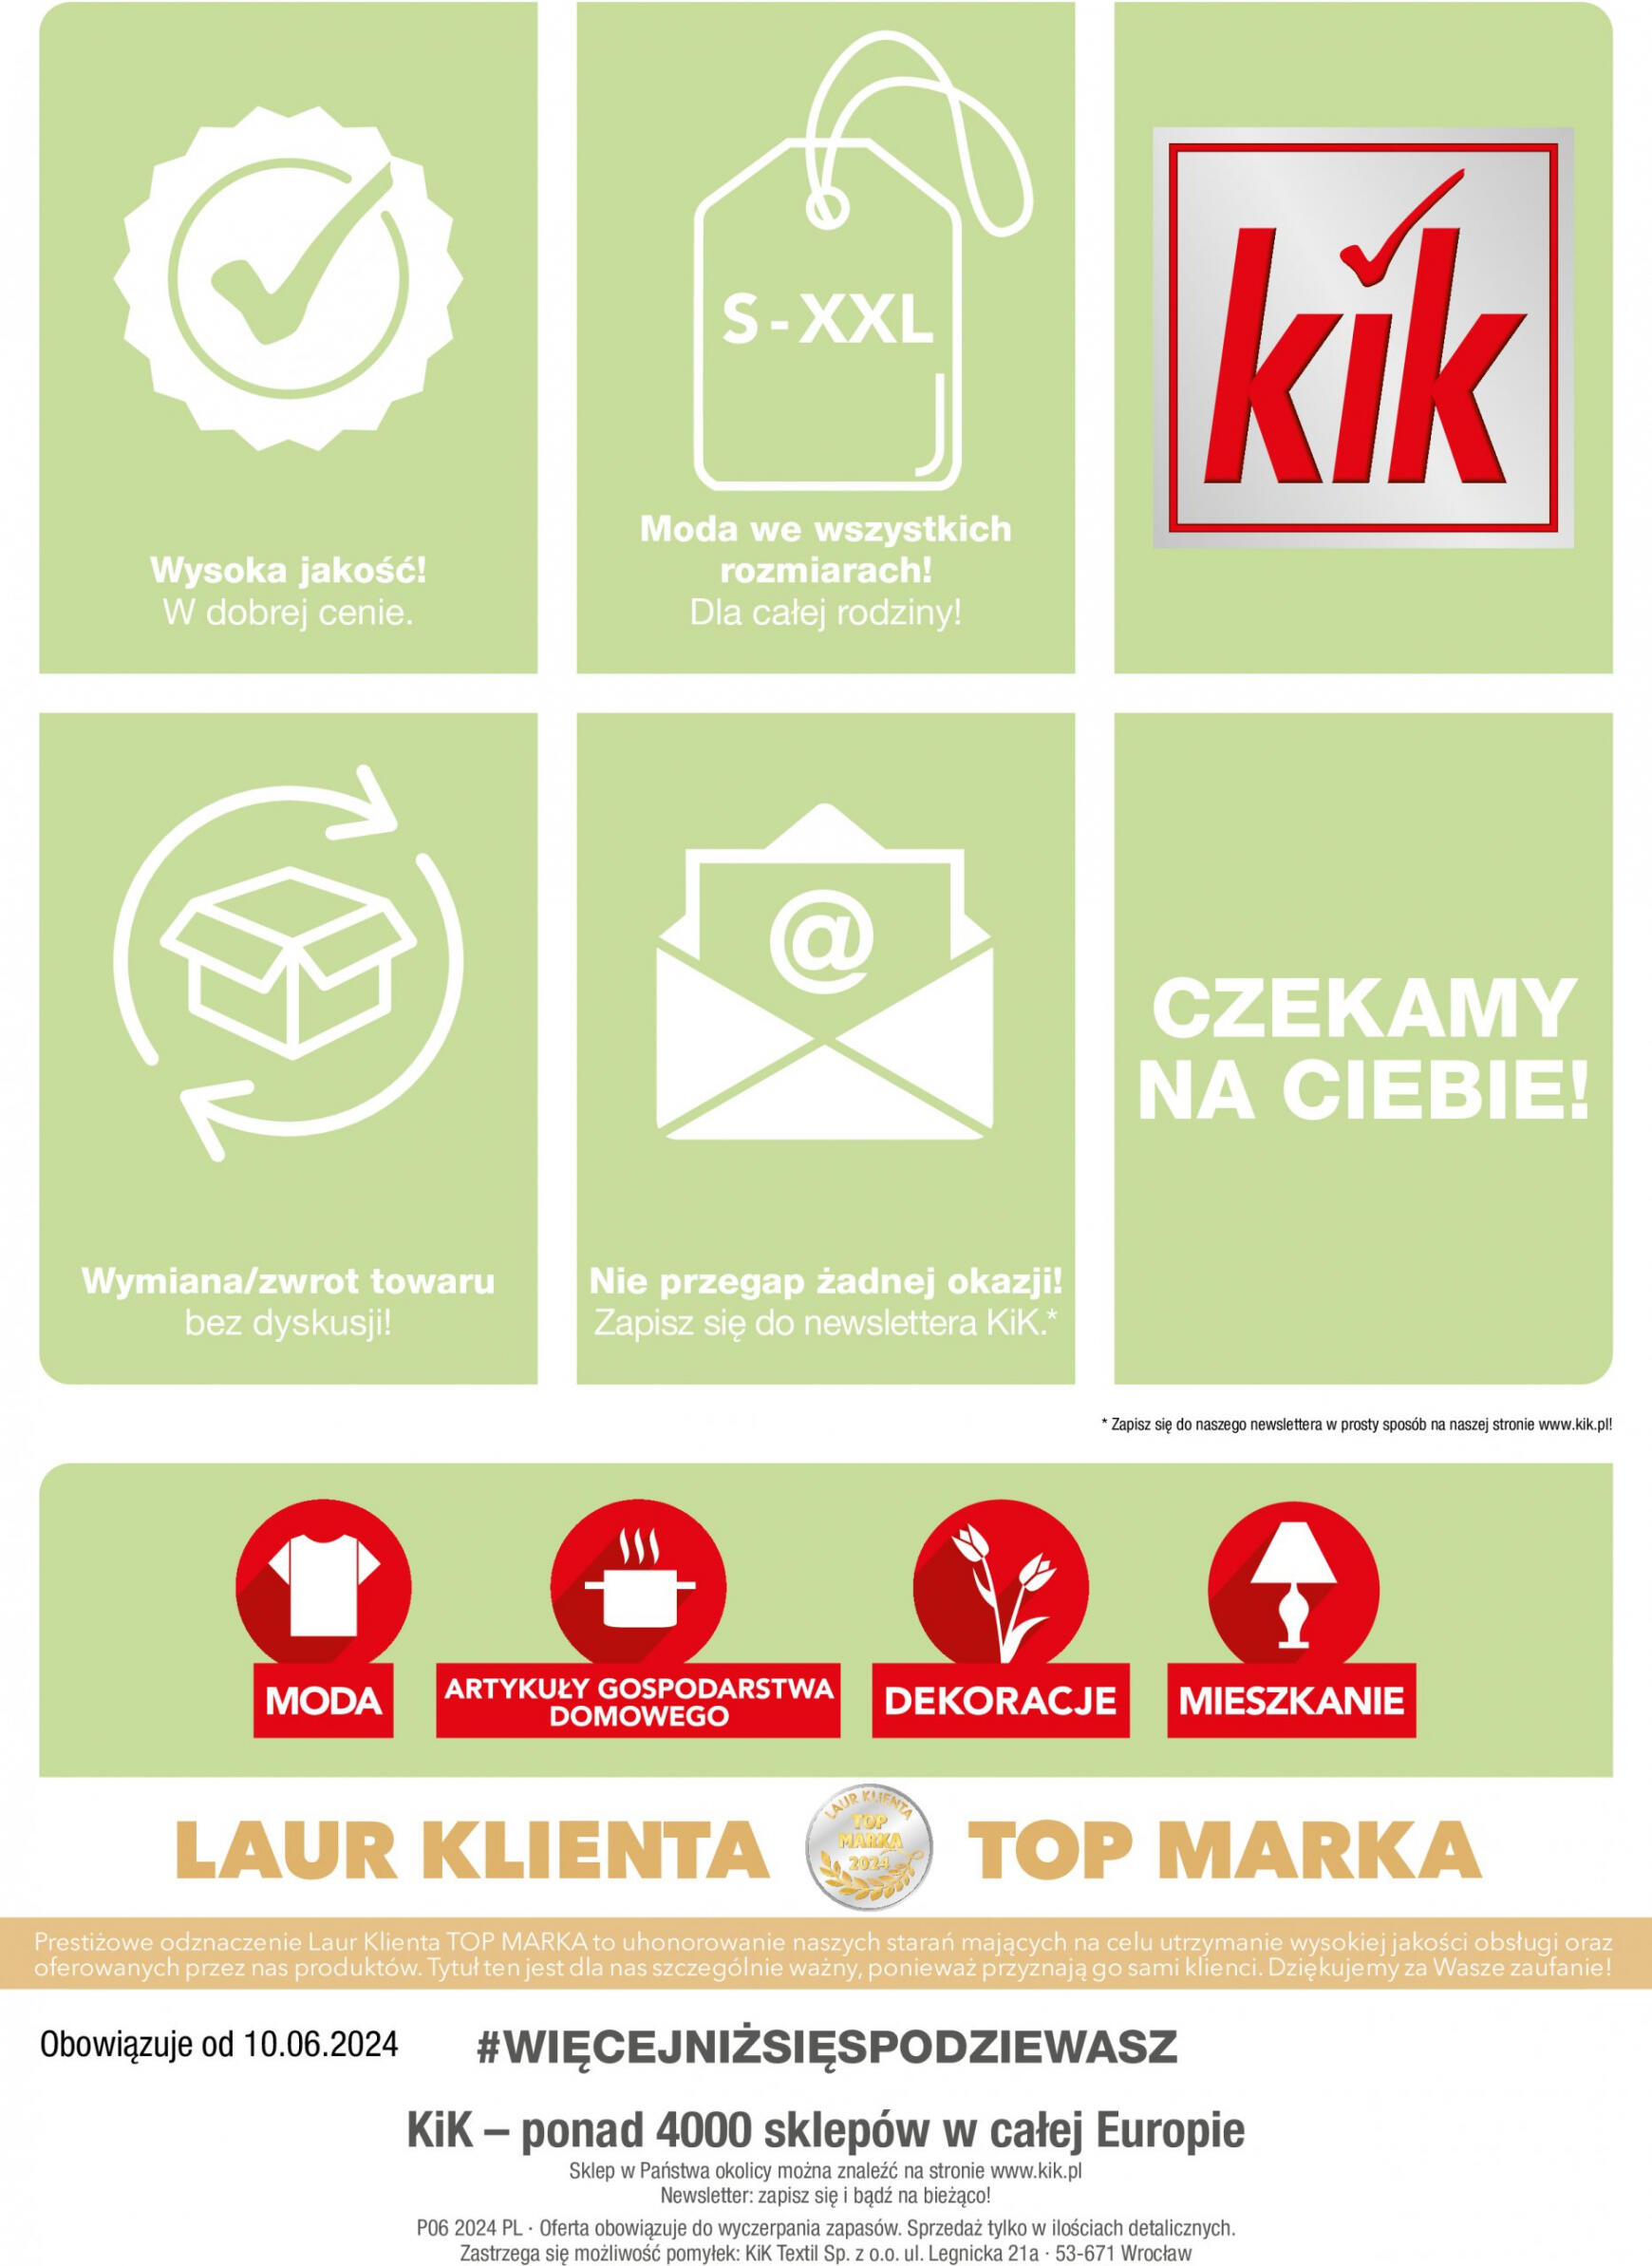 kik - Kik gazetka aktualna ważna od 10.06. - 10.07. - page: 27